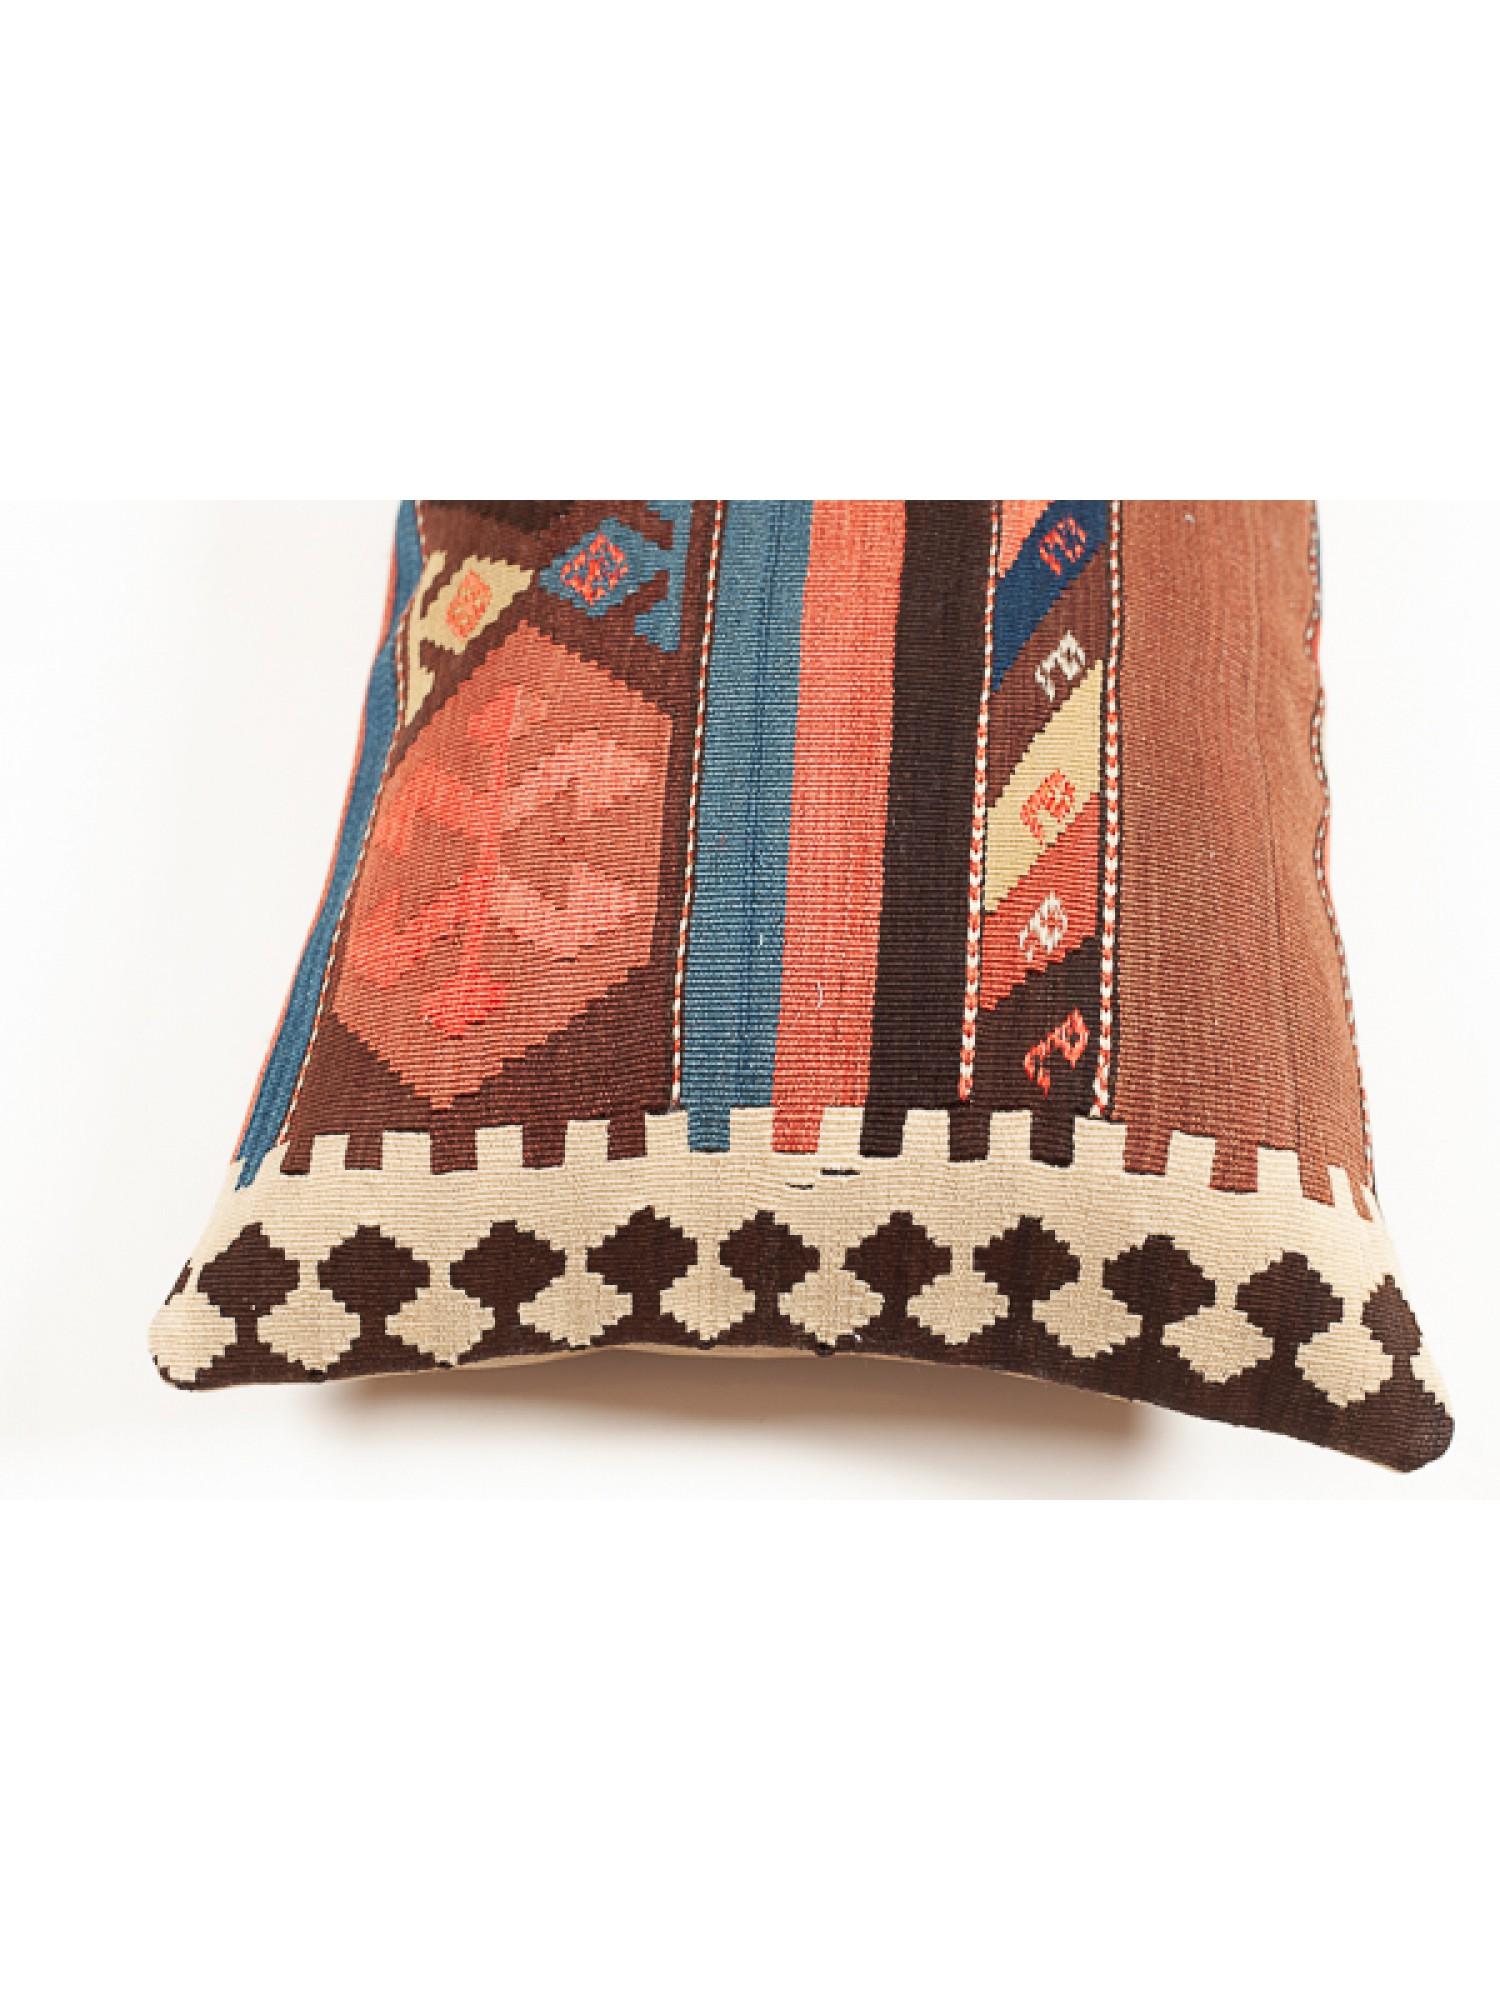 Hand-Woven Antique & Old Kilim Cushion Cover, Anatolian Yastik Turkish Modern Pillow KC3542 For Sale